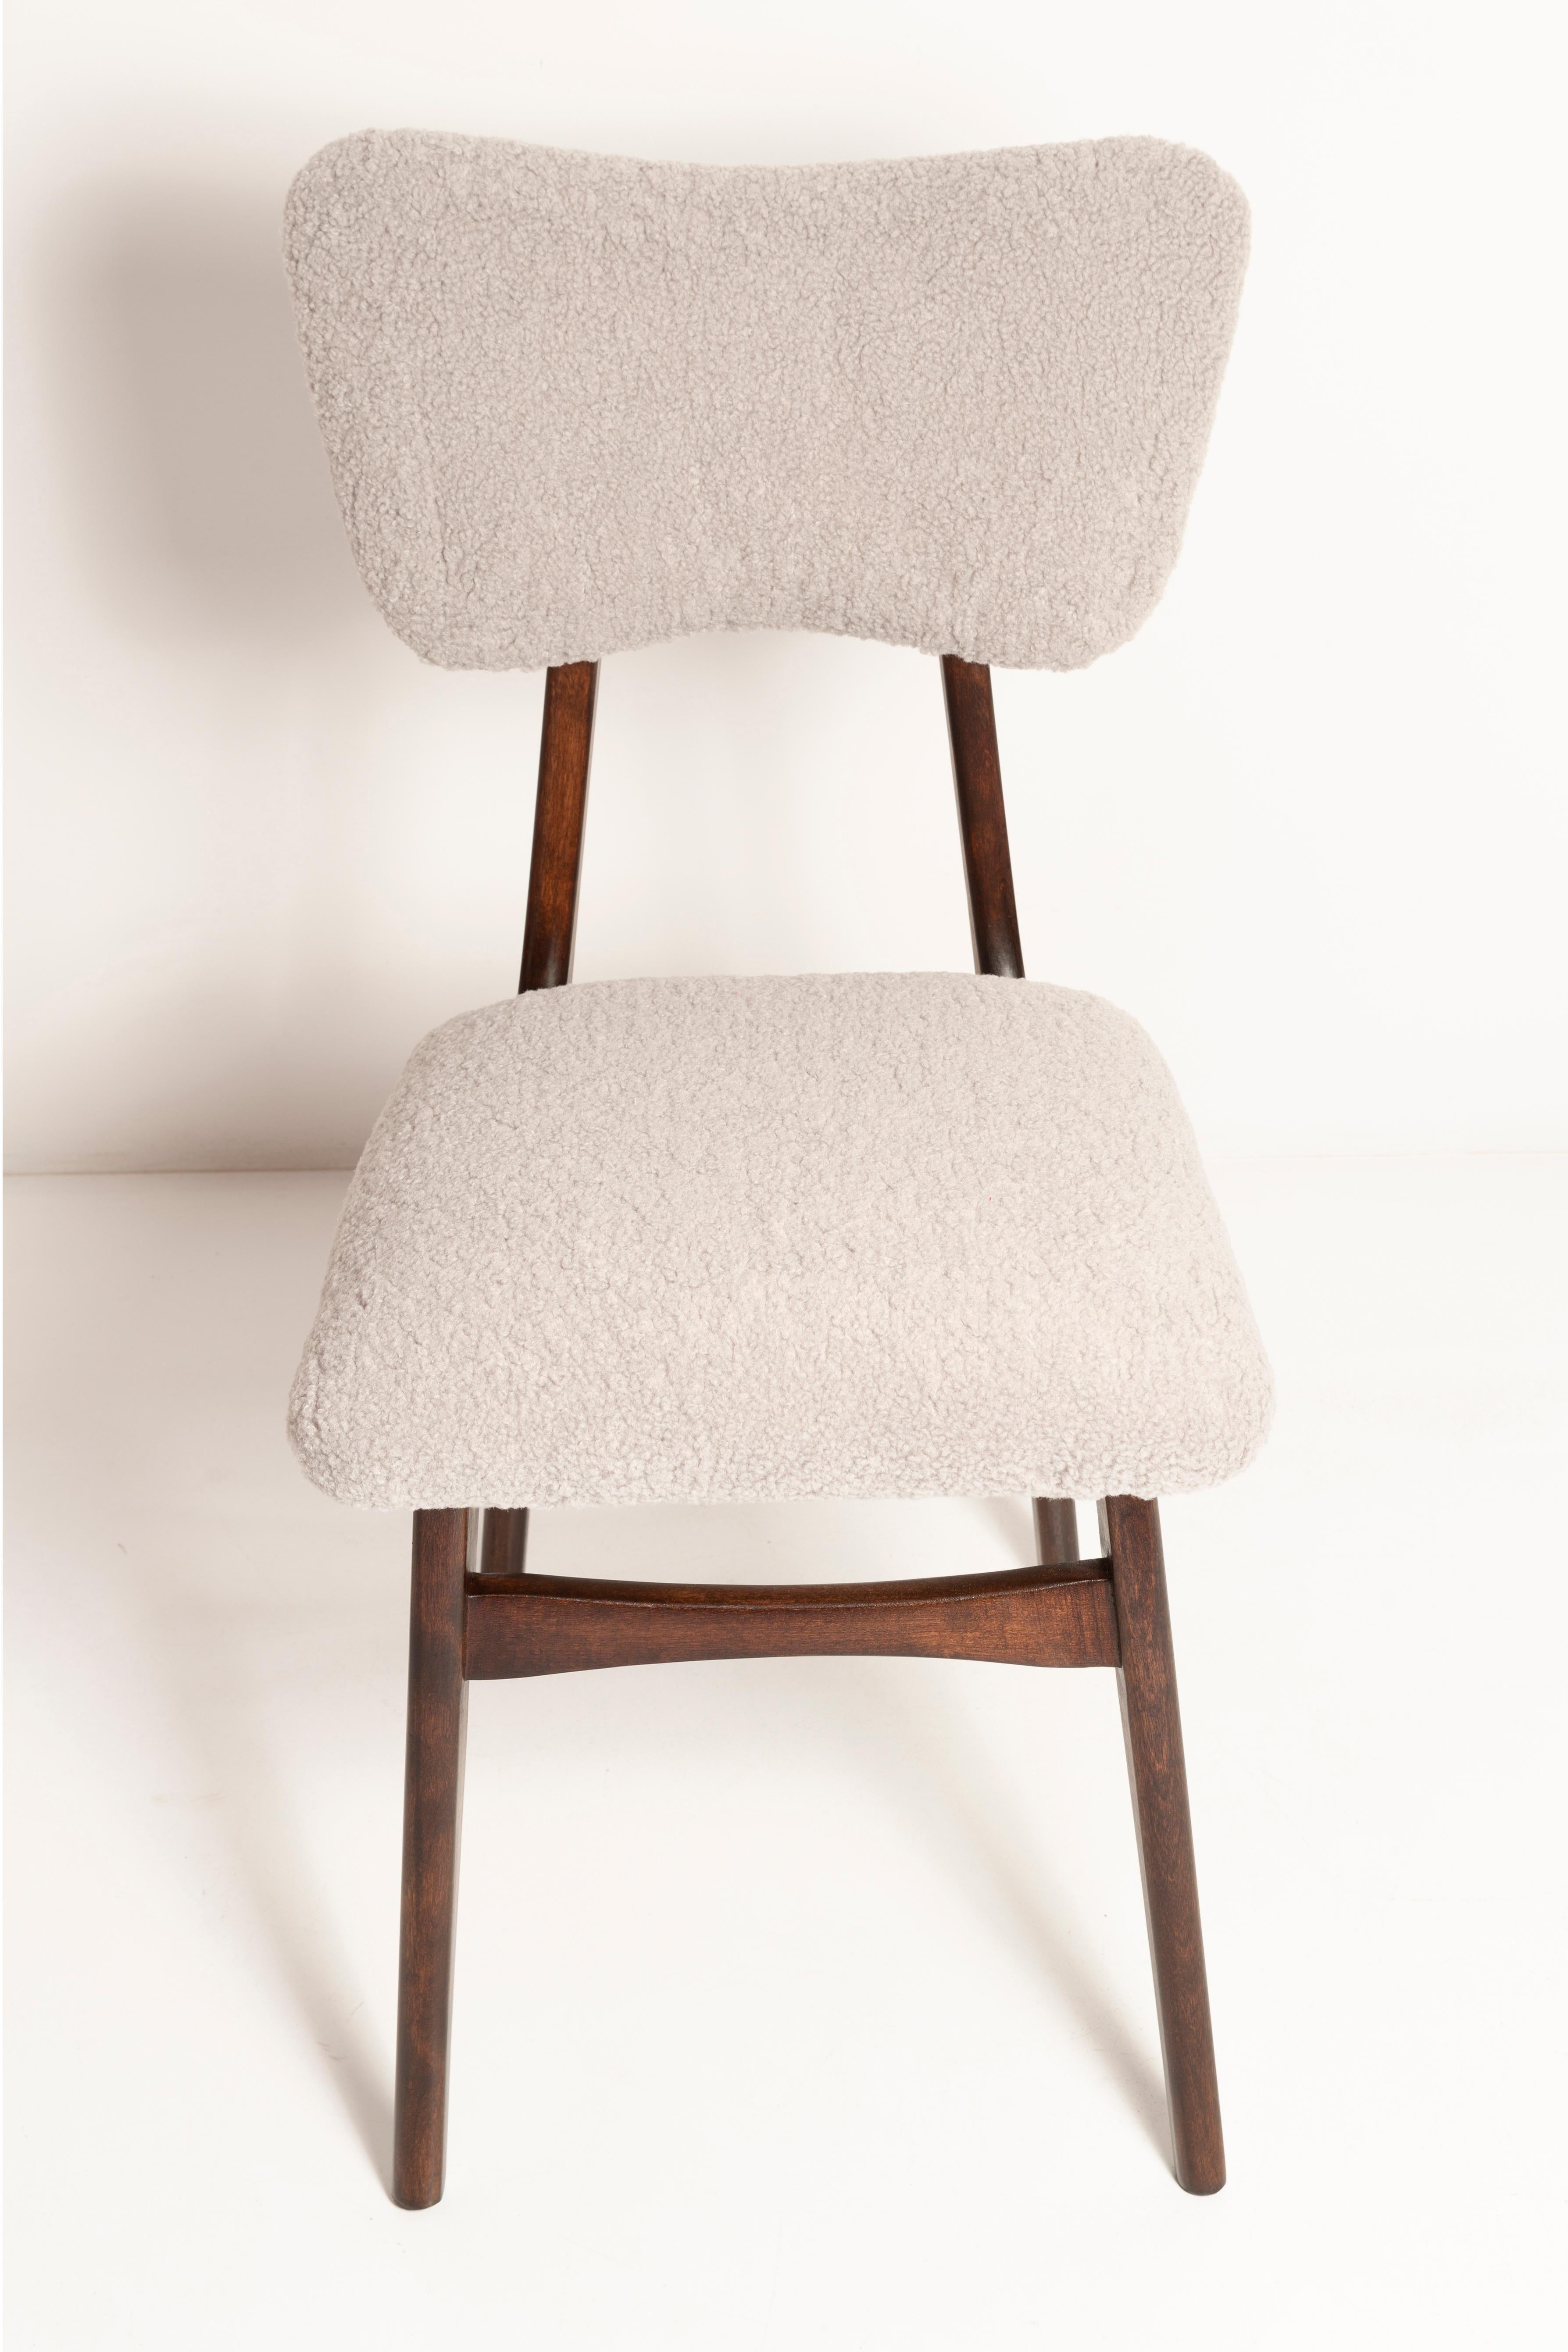 Set of Ten Mid Century Chairs, Light Gray Boucle, Dark Walnut Wood, Europe, 1960s For Sale 5